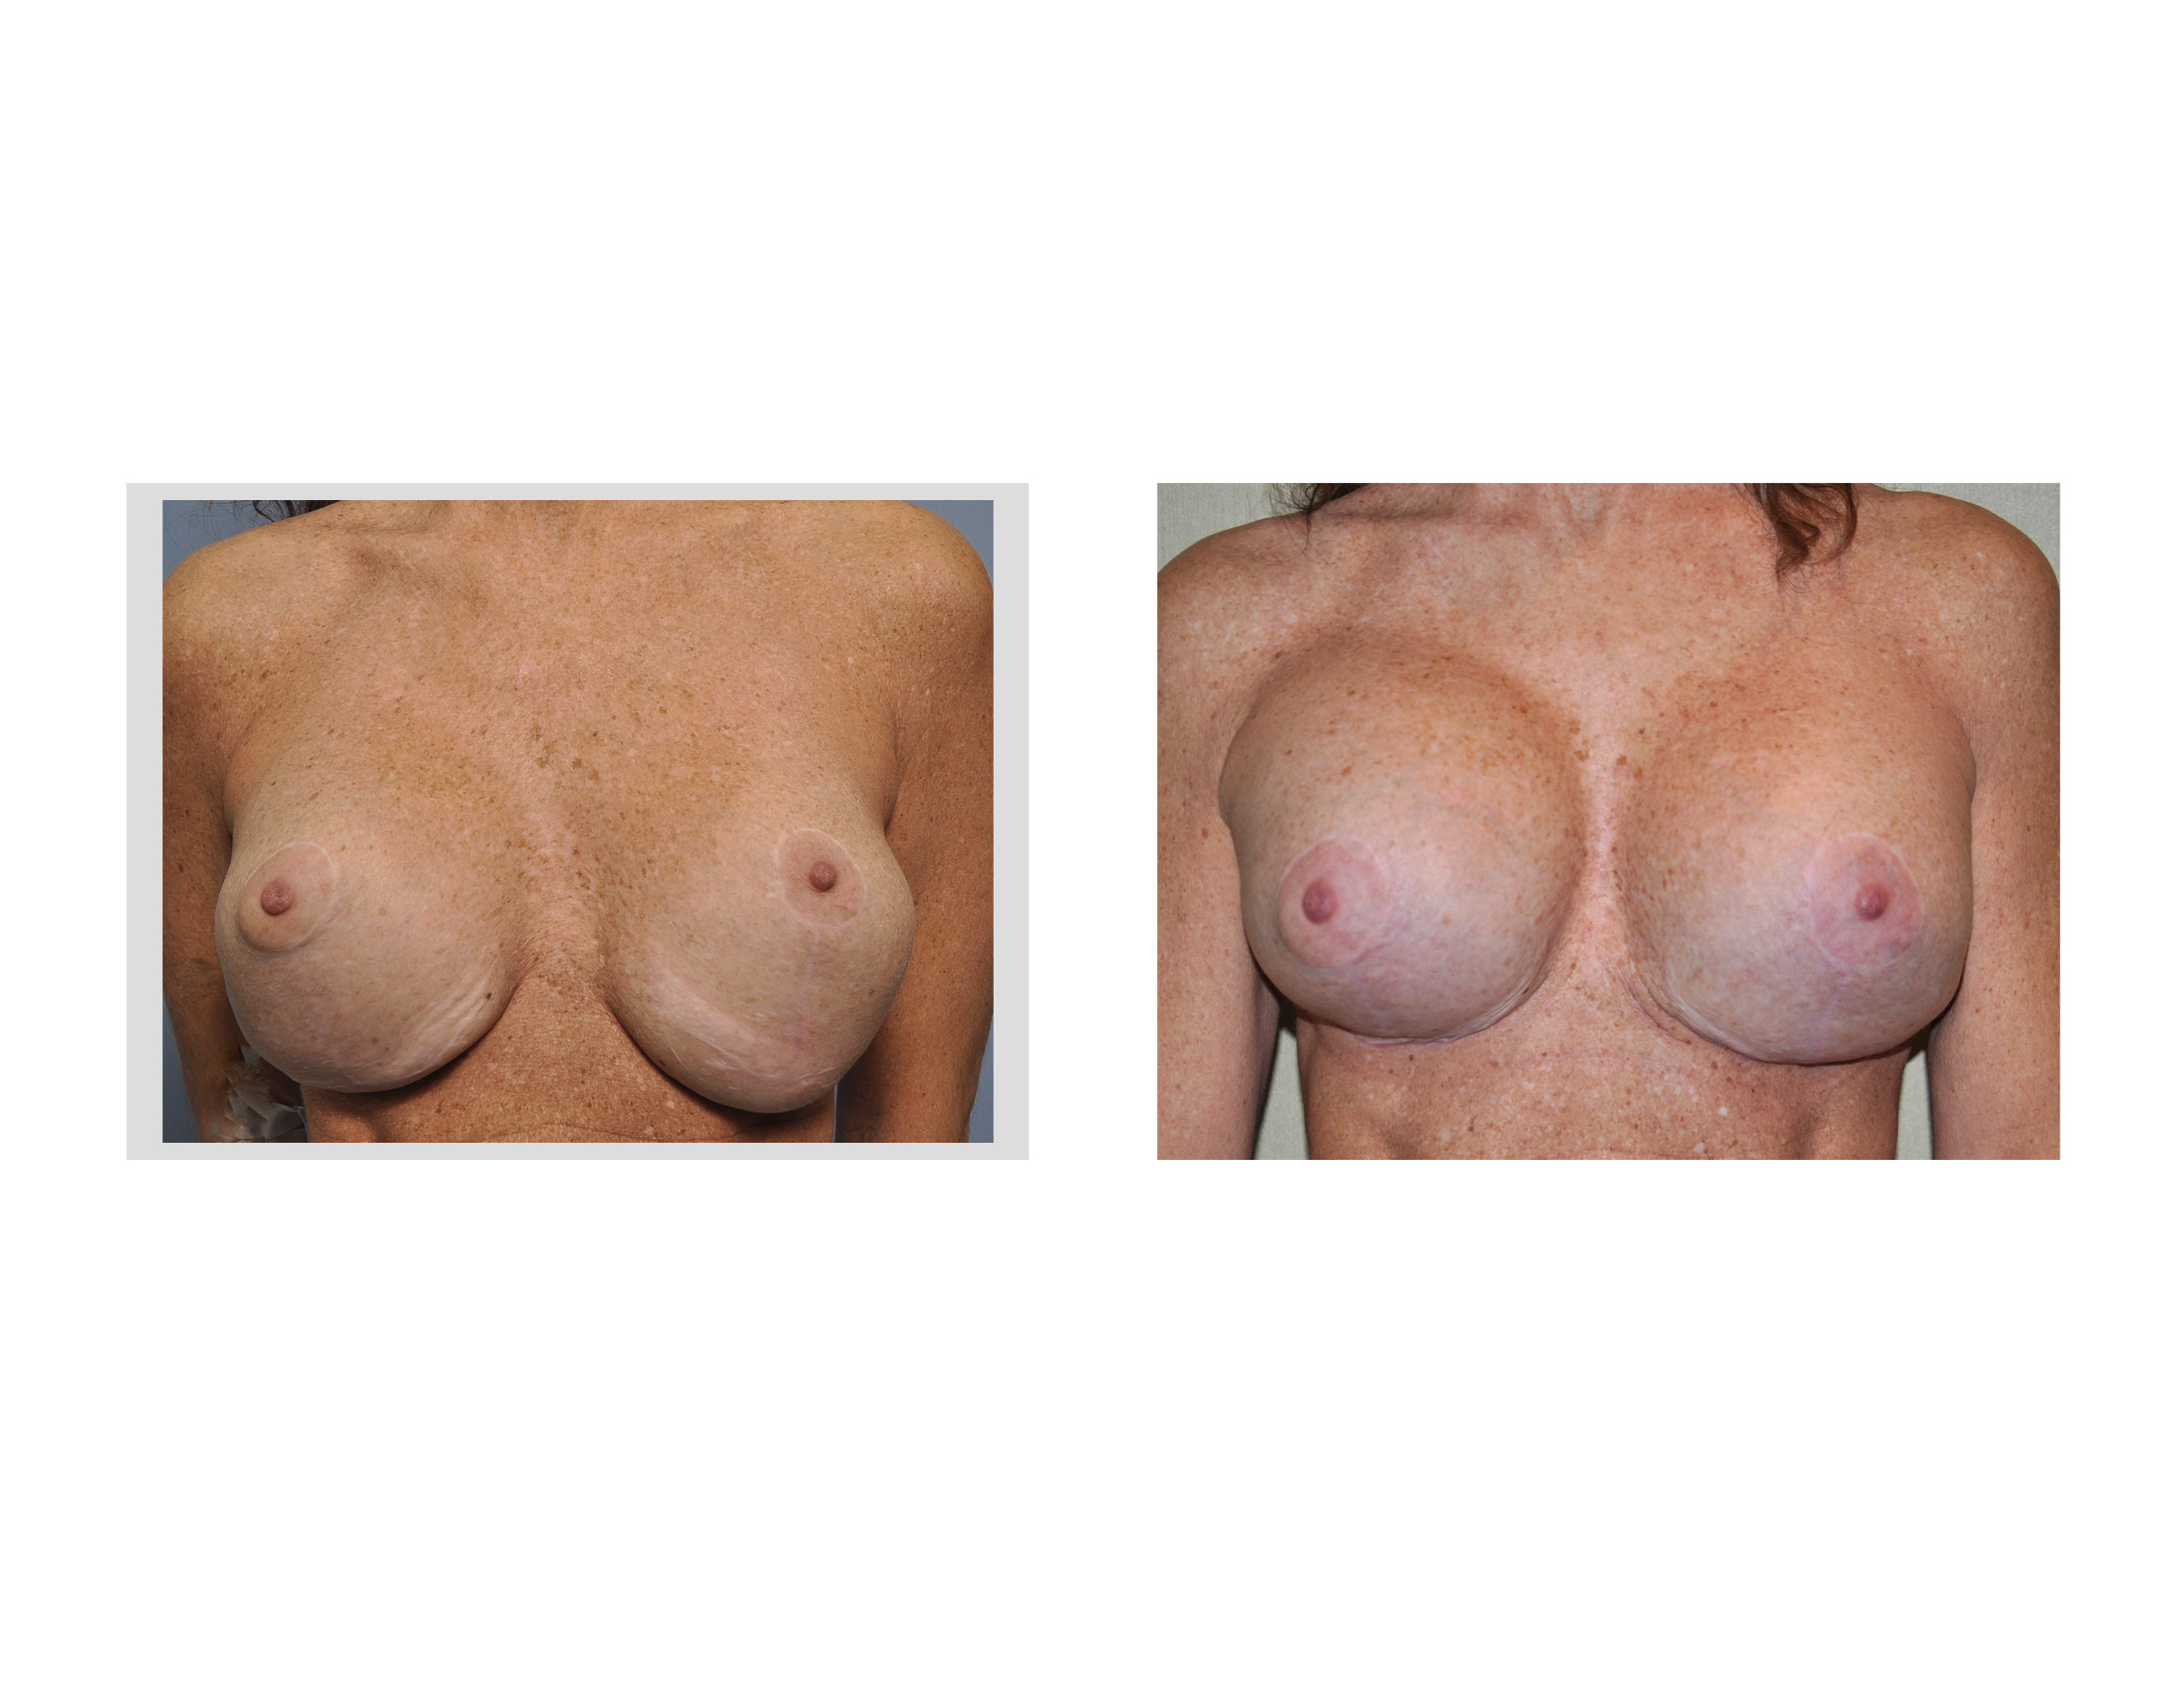 Stevo breast implants